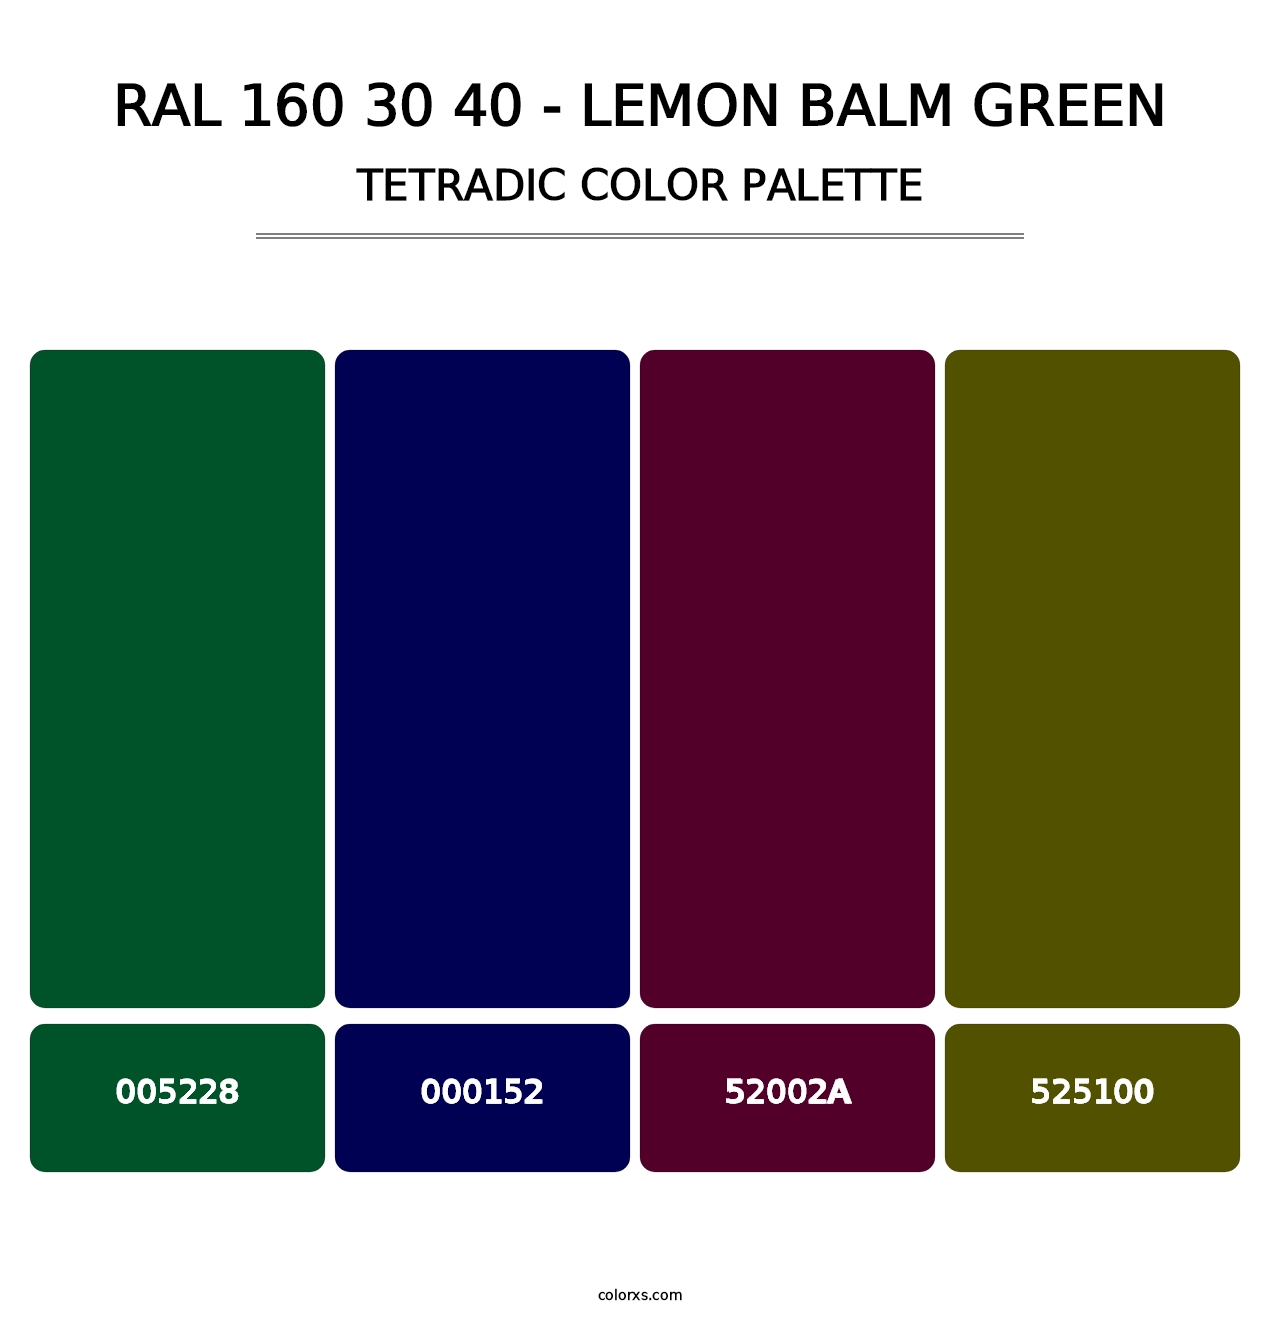 RAL 160 30 40 - Lemon Balm Green - Tetradic Color Palette